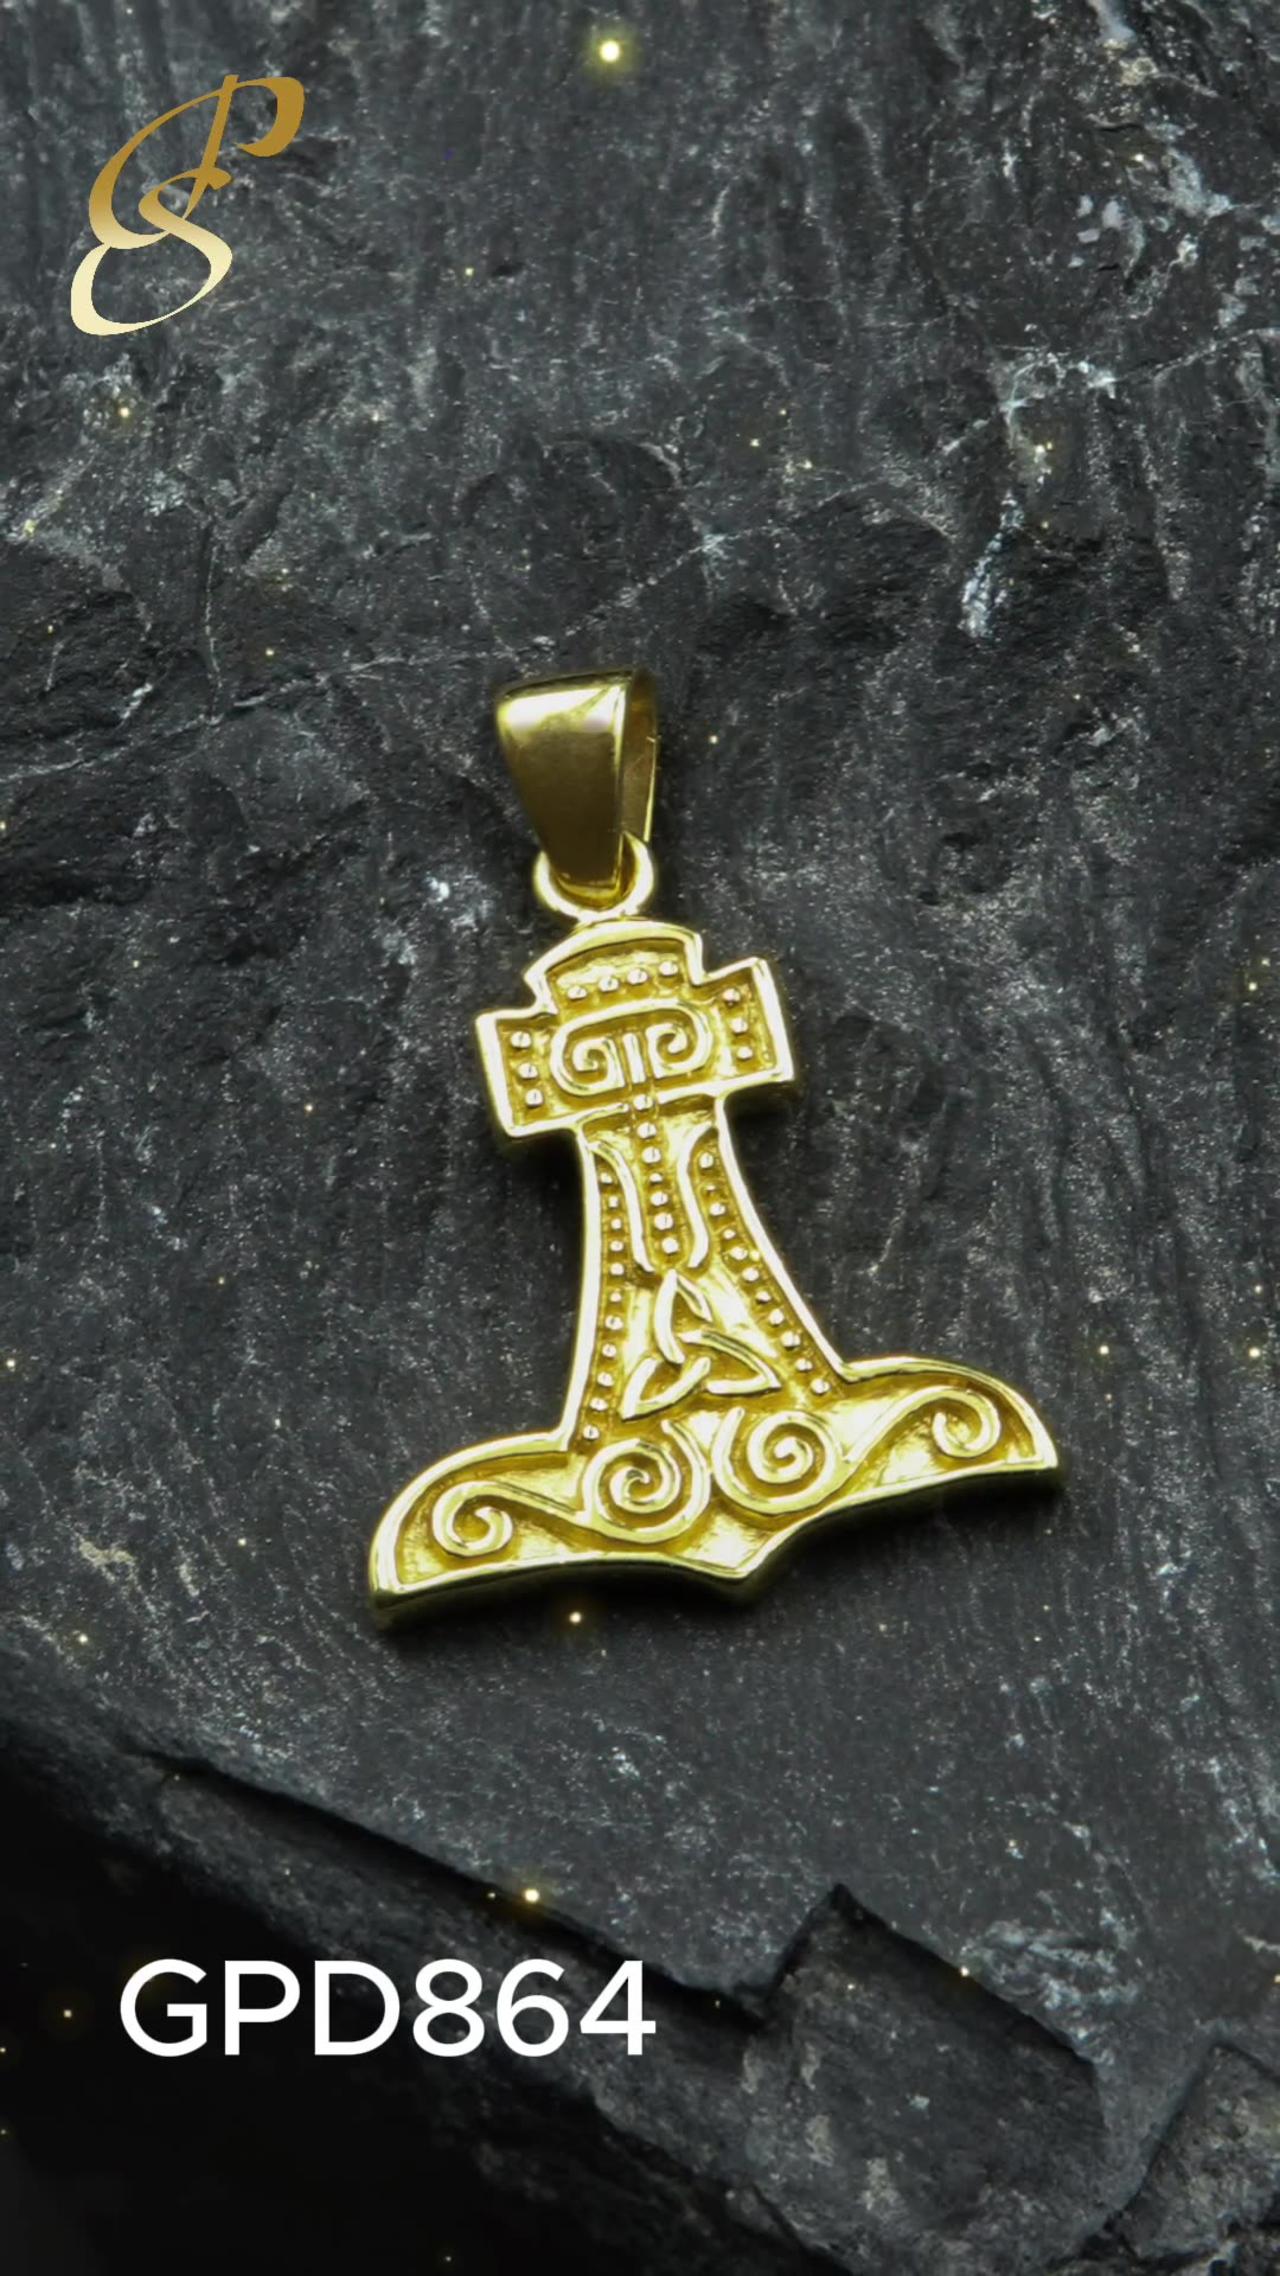 Thor's Hammer: Symbolic Gold Pendant